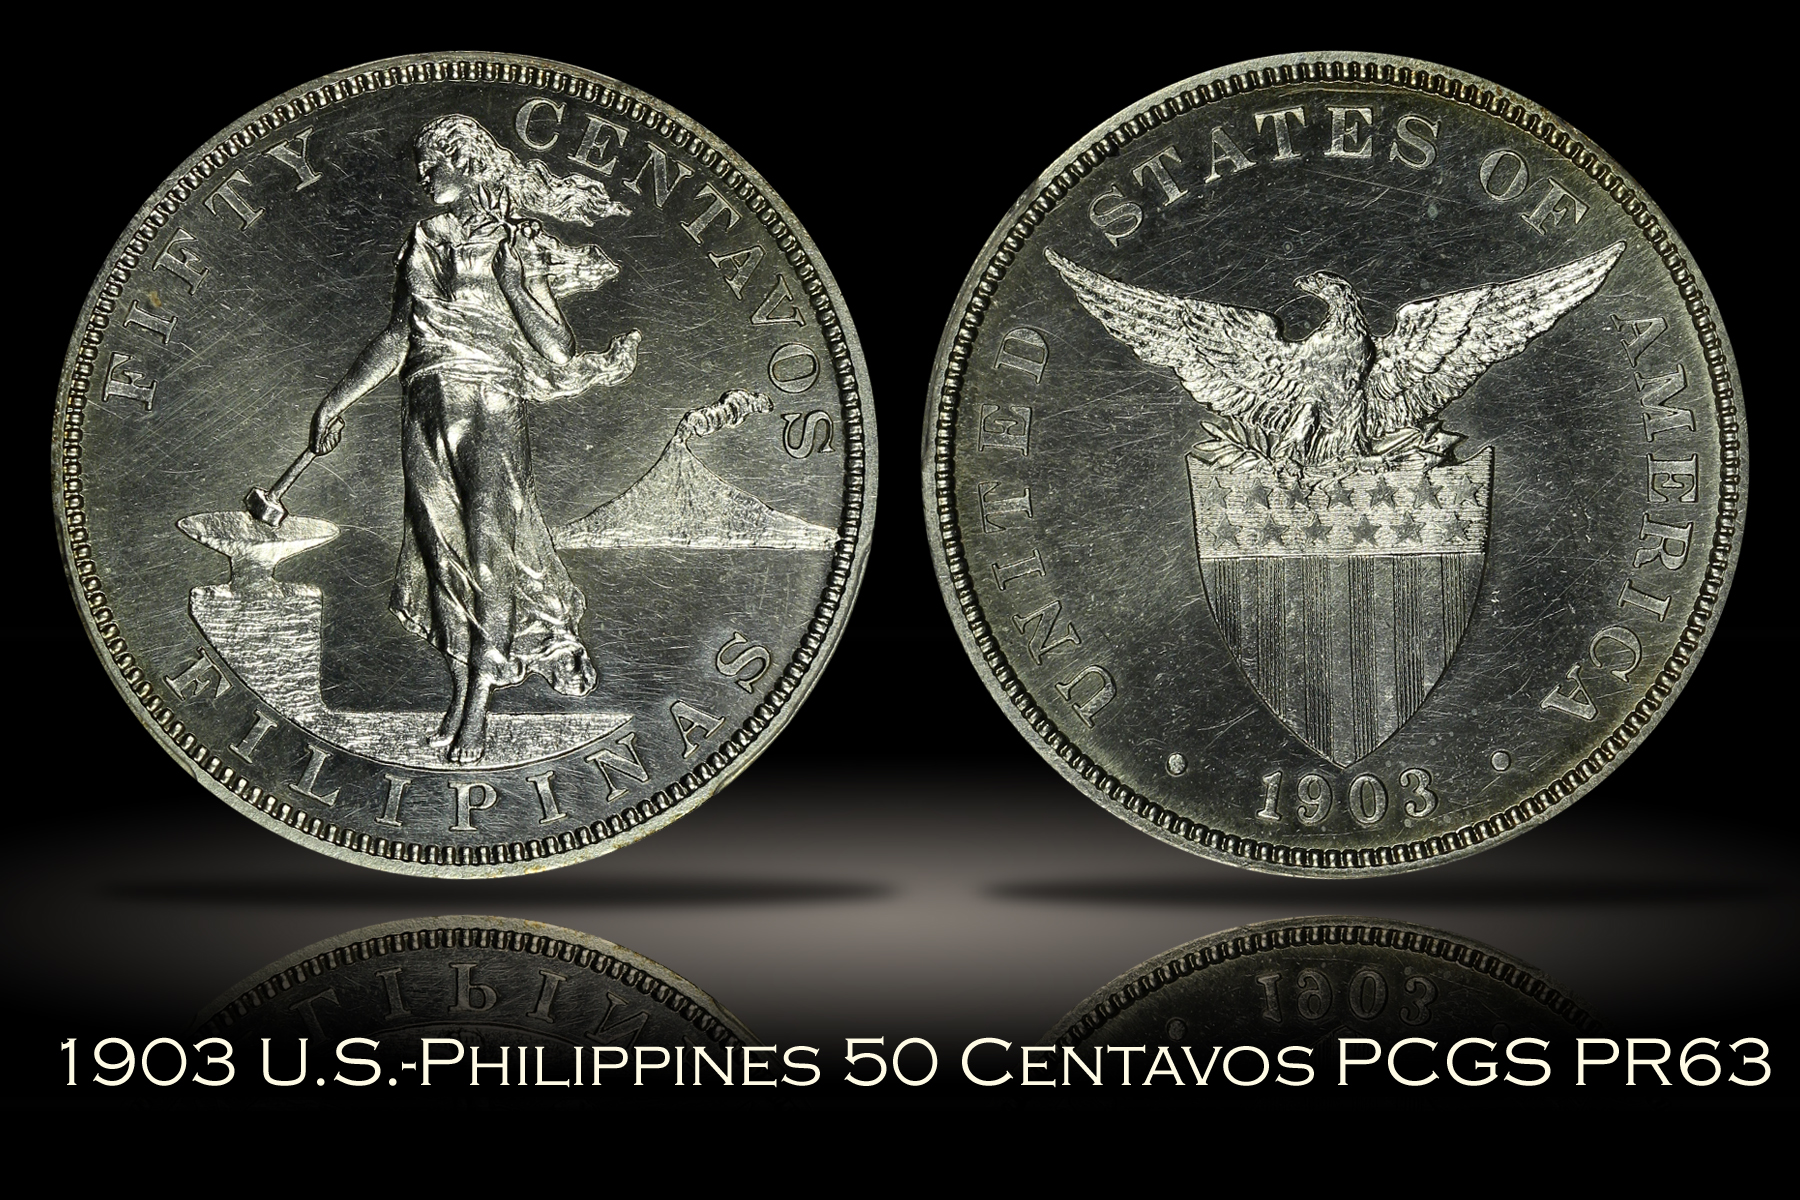 1903 U.S.-Philippines Proof 50 Centavos PCGS PR63